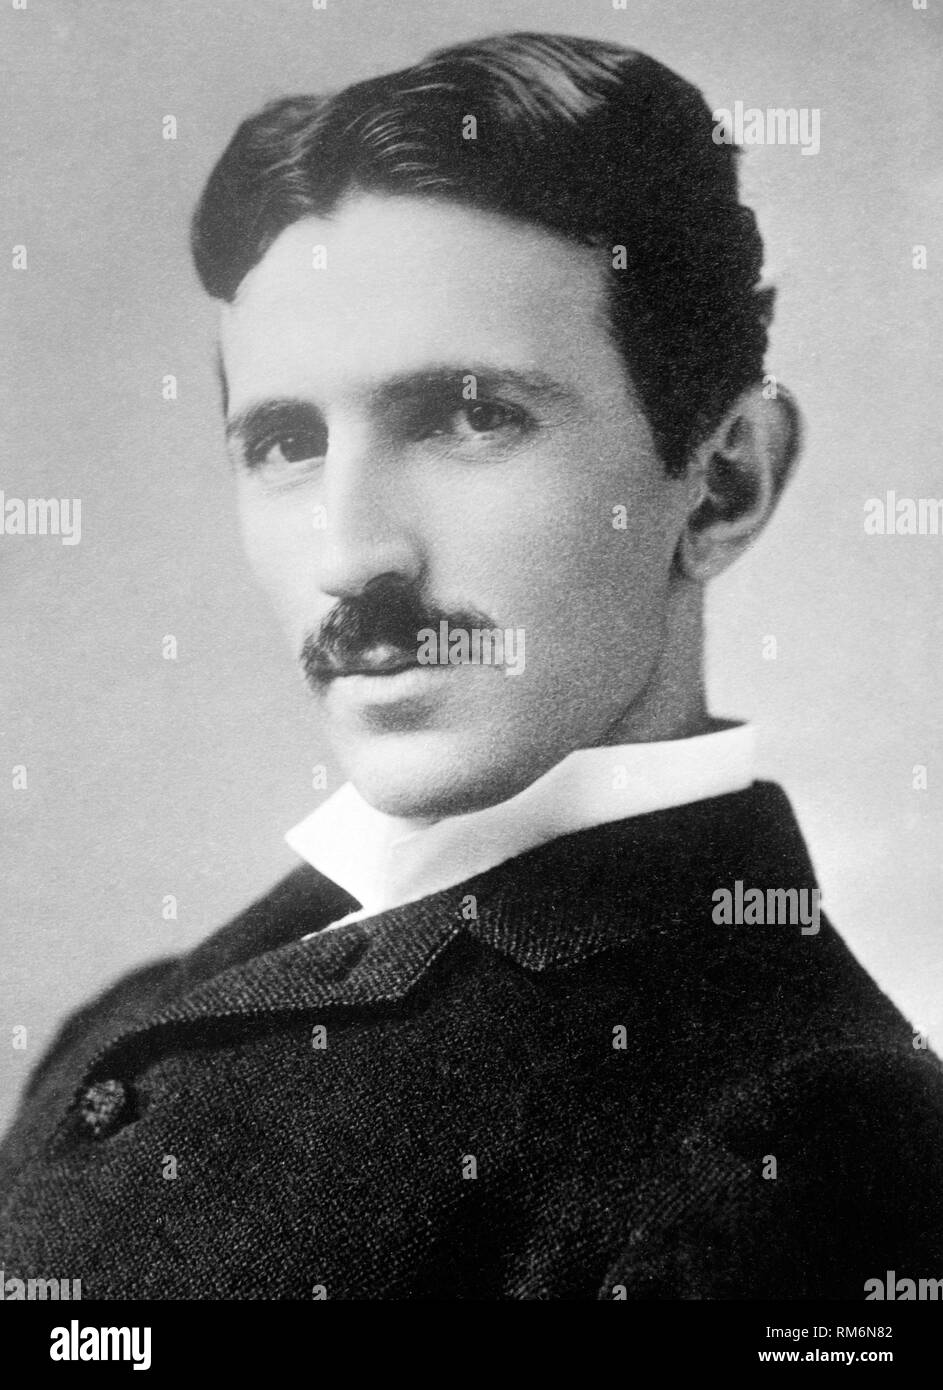 Nikola Tesla serbian american inventor electrial engineer and futurist Photo taken circa 1890 Stock Photo